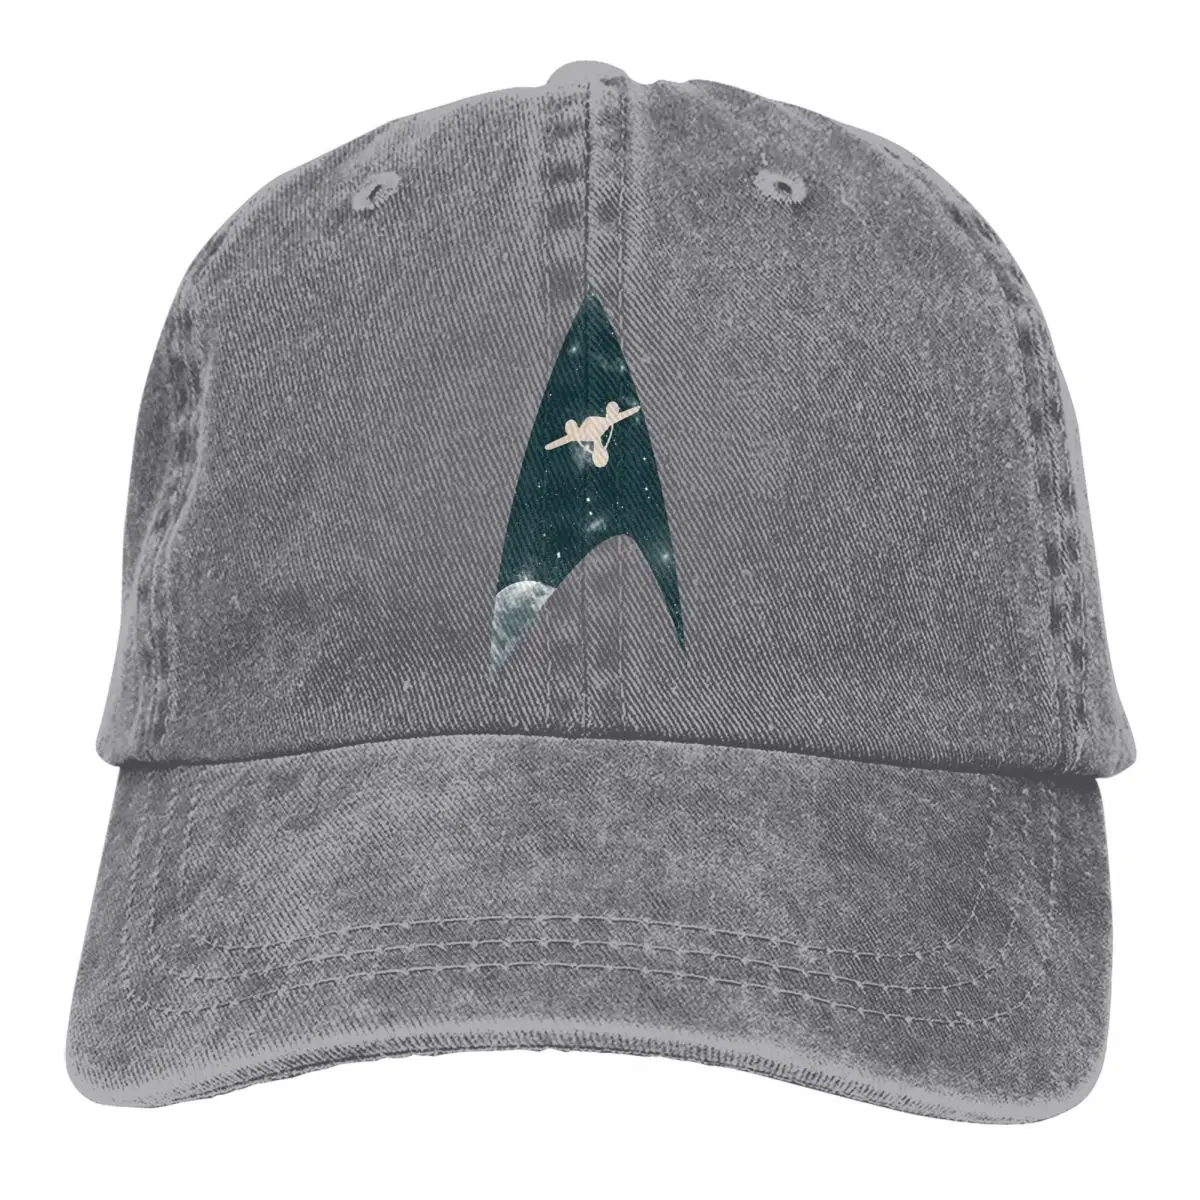 Space Baseball Caps Peaked Cap Star Trek Spok Science Fiction Film Sun Shade Hats for Men